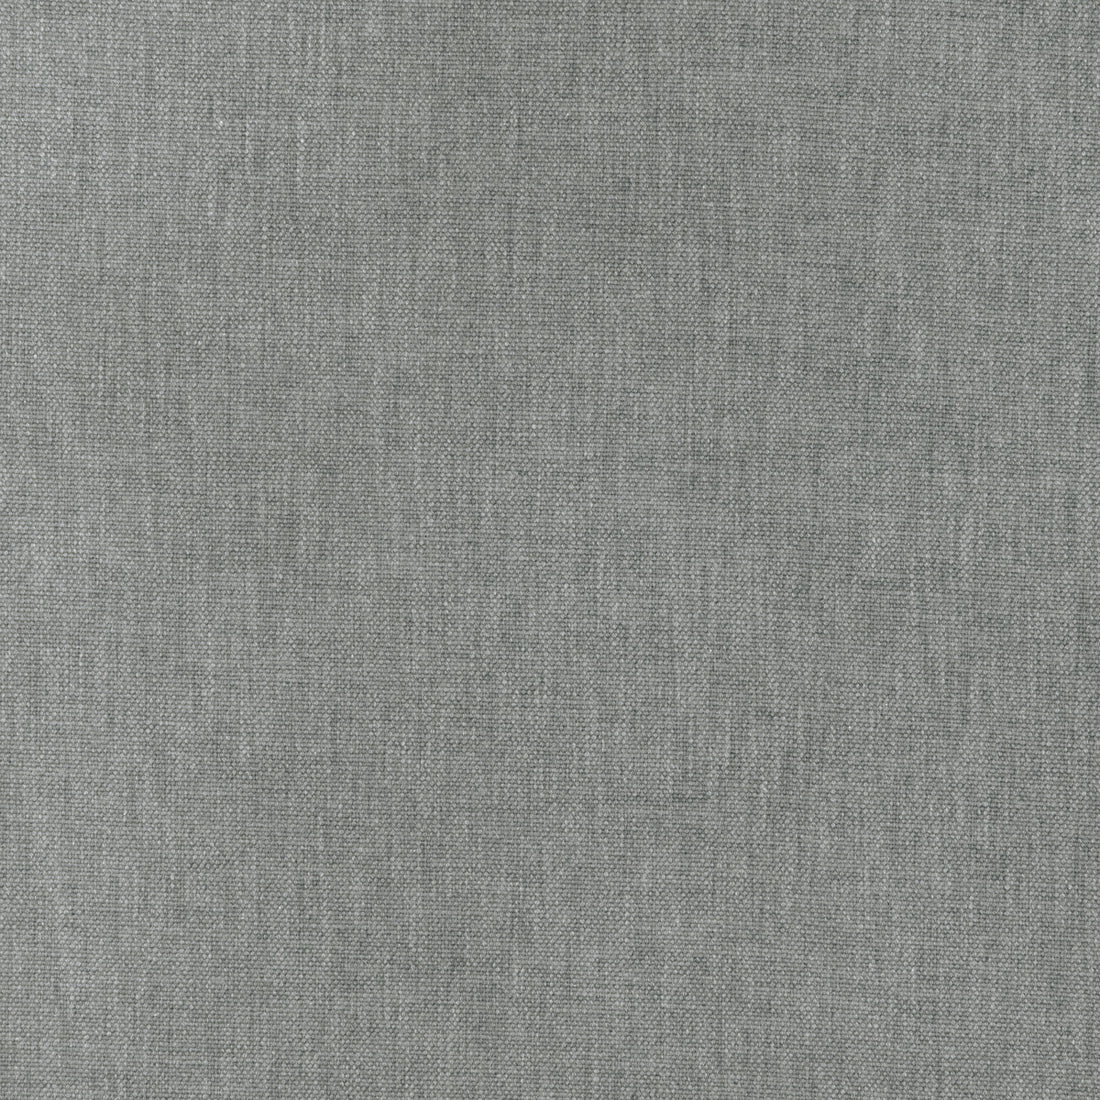 Kravet Smart fabric in 37066-52 color - pattern 37066.52.0 - by Kravet Smart